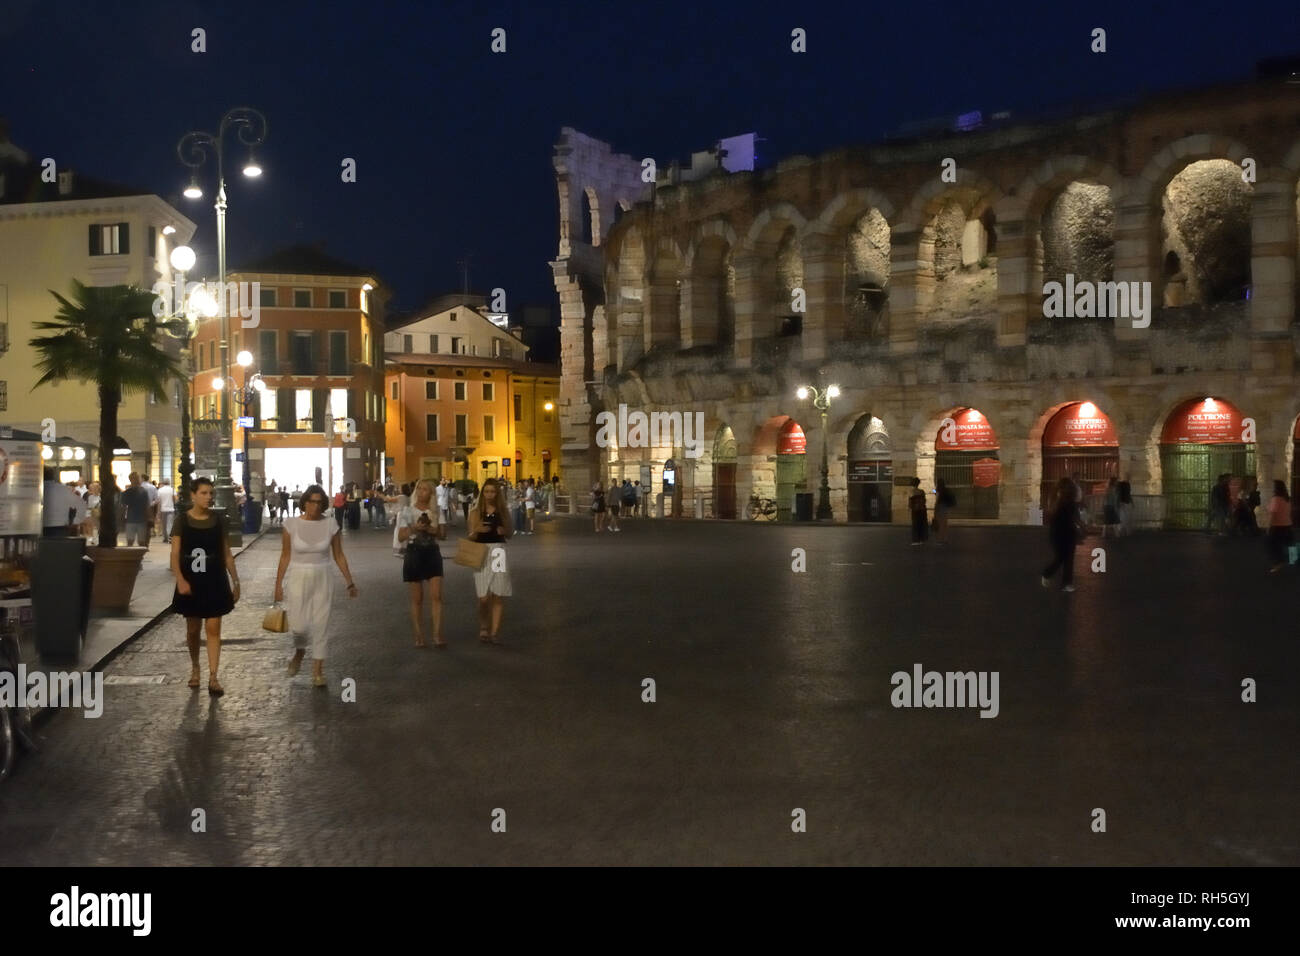 Römischen Amphitheater Arena di Verona in Verona - Italien. Stockfoto